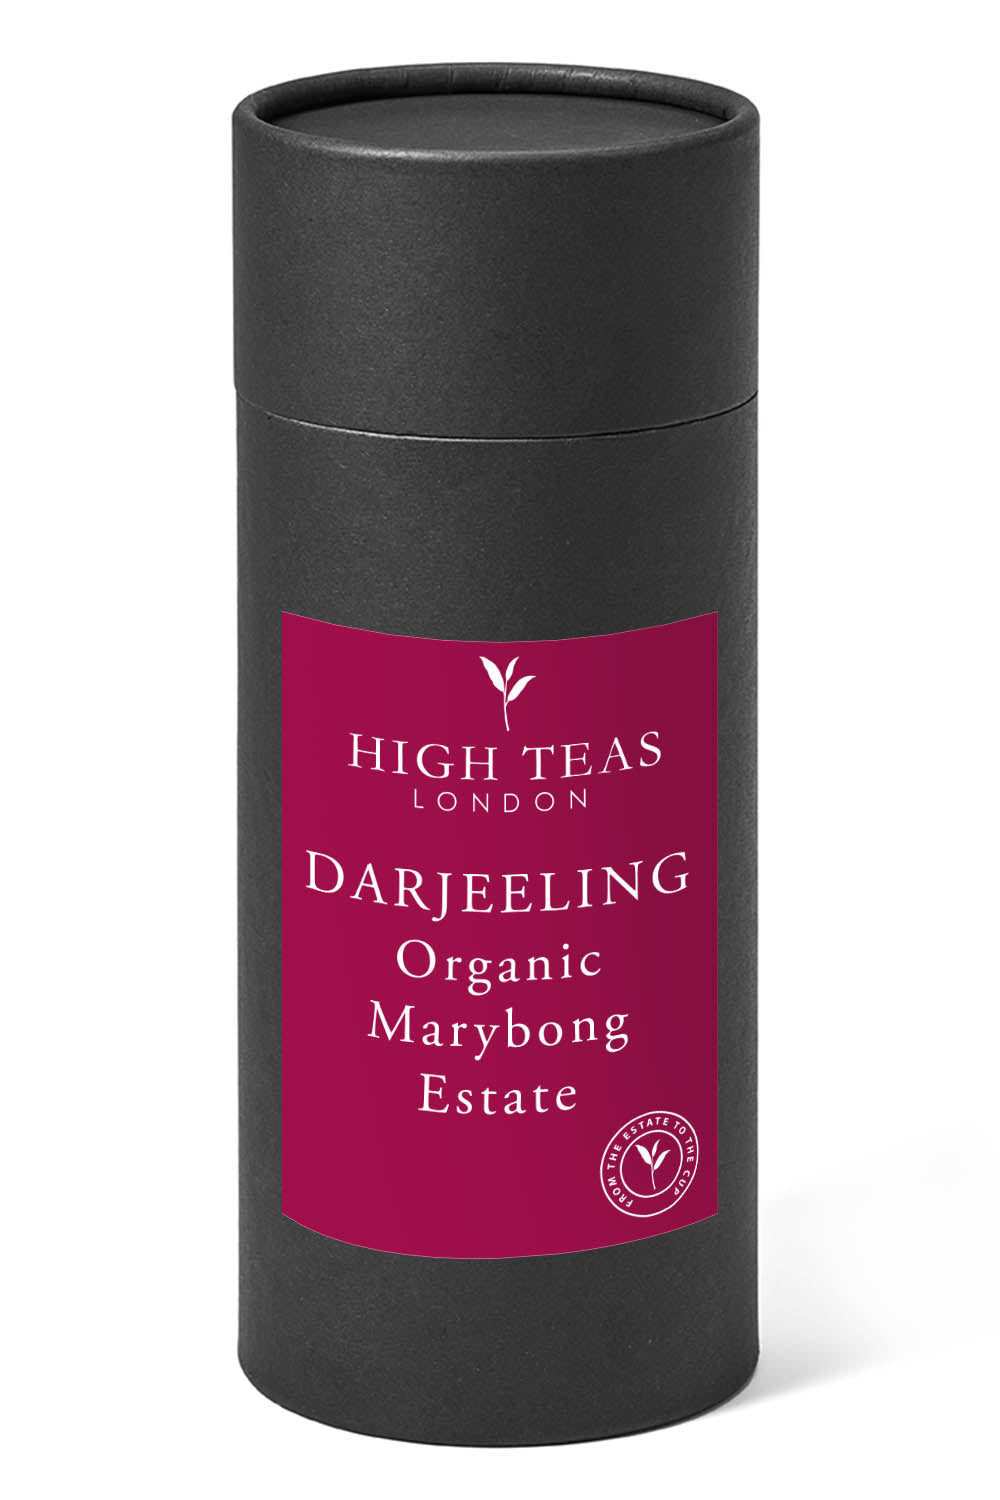 Darjeeling Organic Marybong Estate-150g gift-Loose Leaf Tea-High Teas